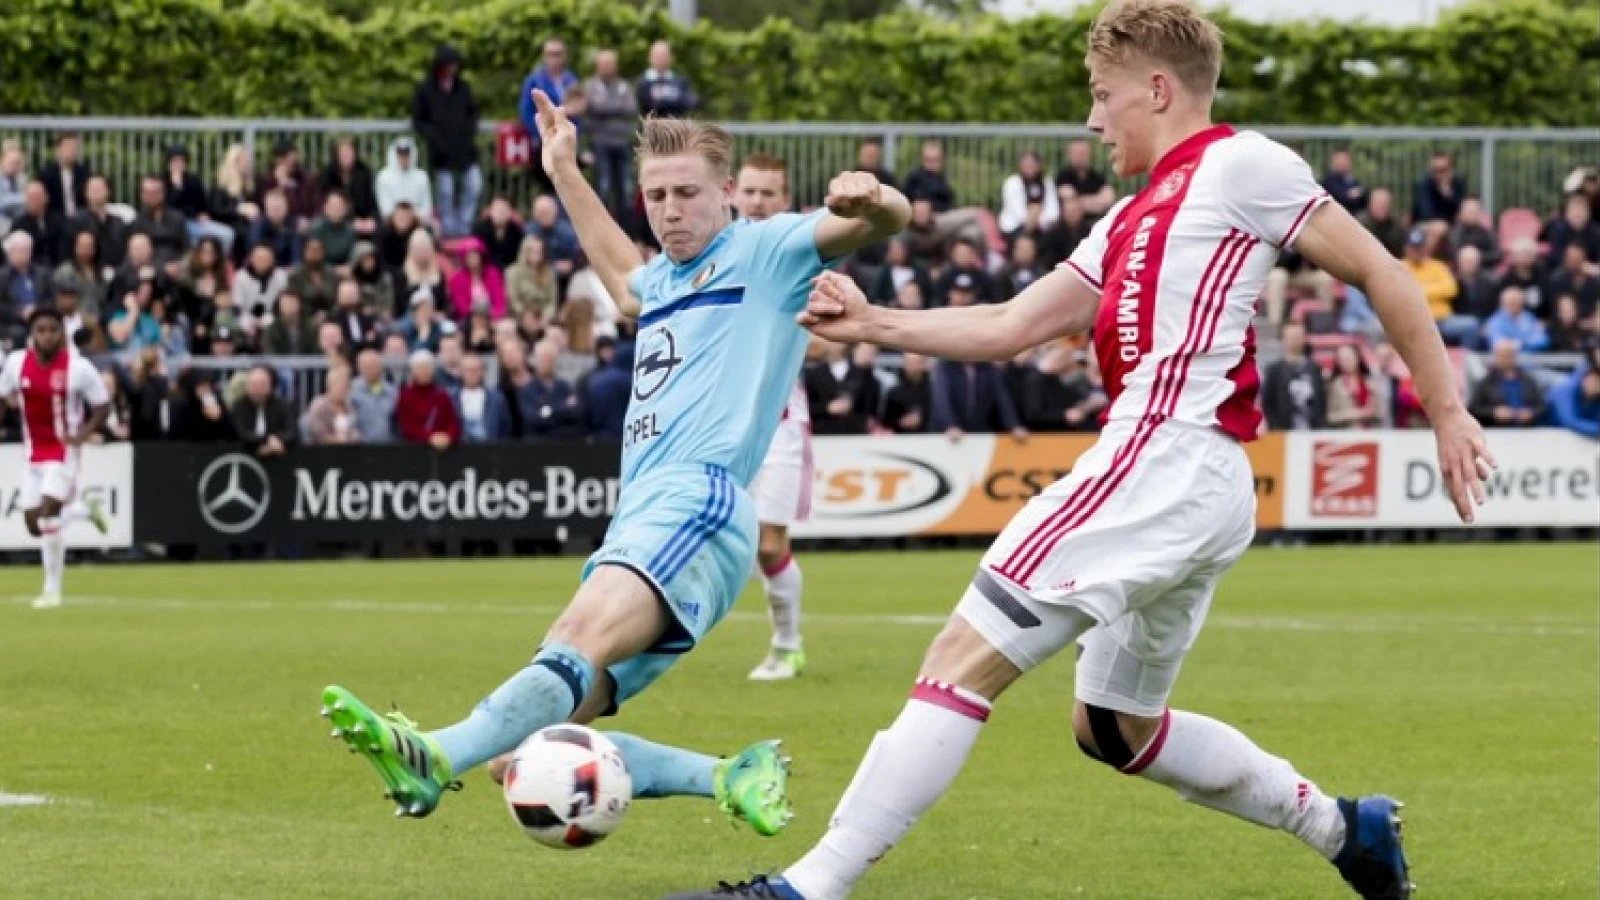 Feyenoord-talent wil plek in eerste elftal:  'Daardoor kom ik sterker terug en kijk ik er positief tegenaan'